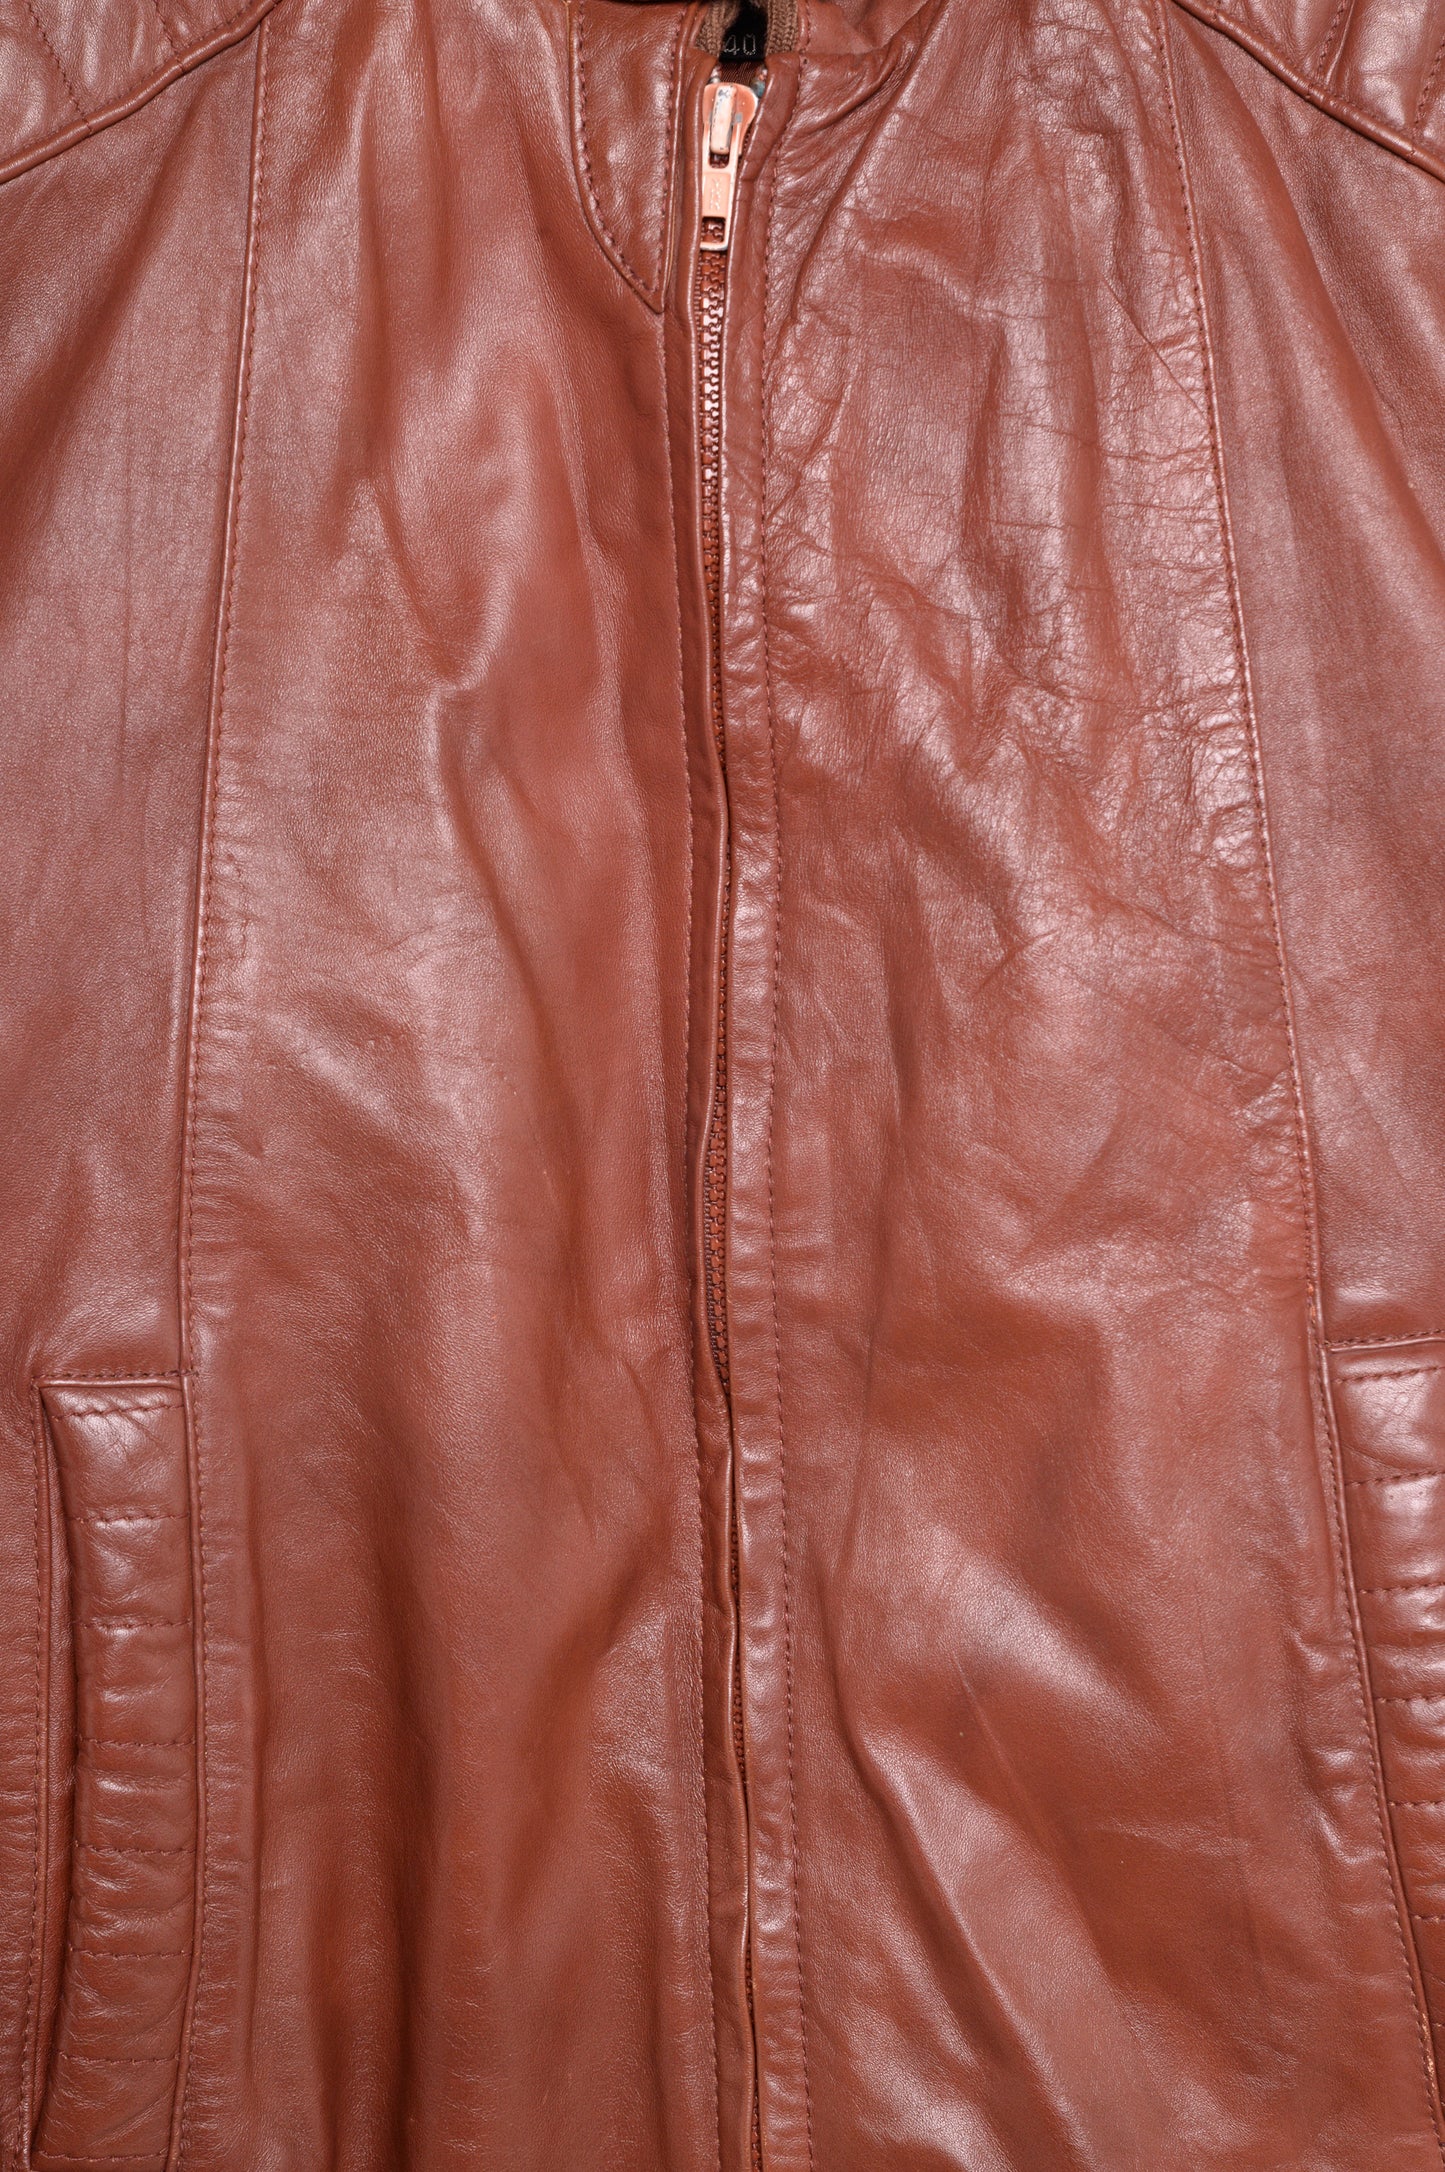 1980s Wilsons Leather Bomber Jacket